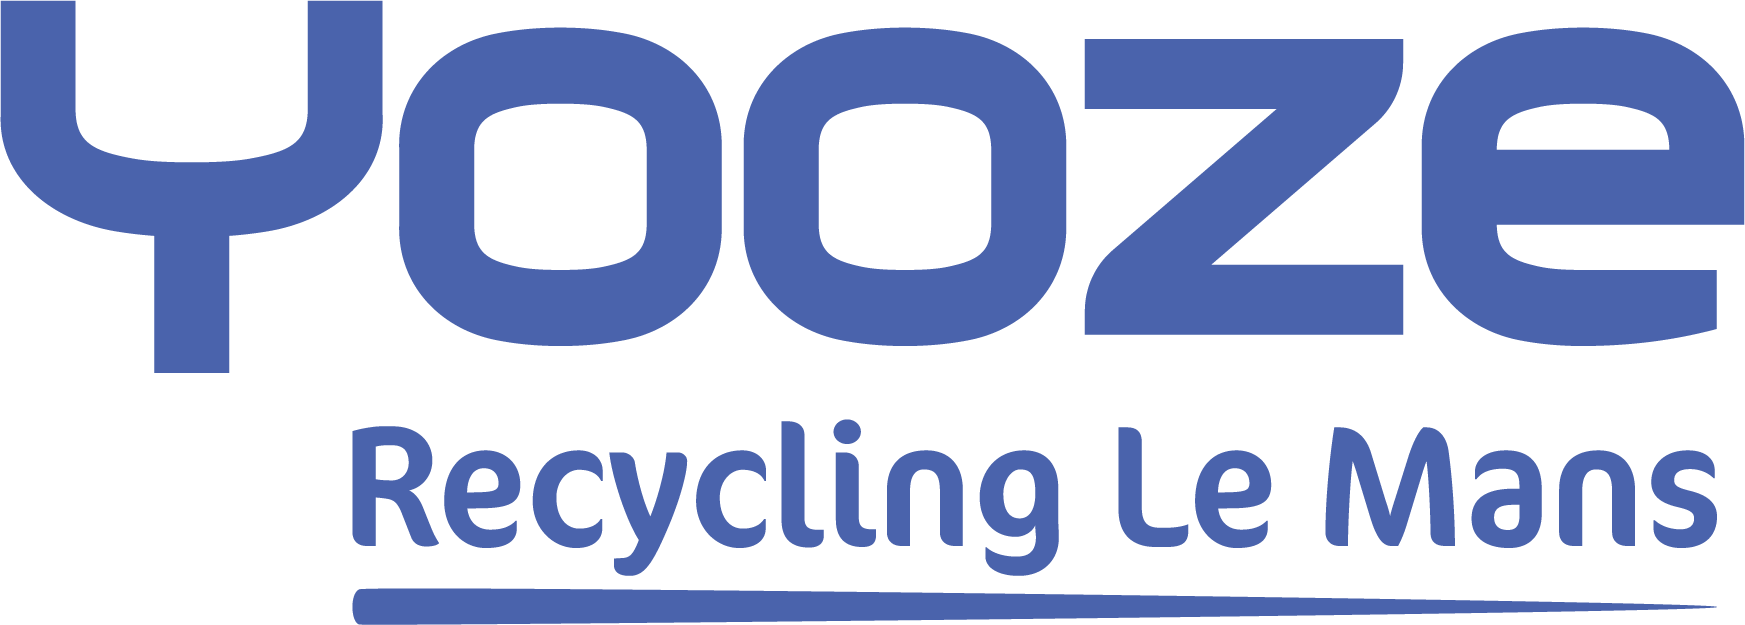 Yooze Recycling